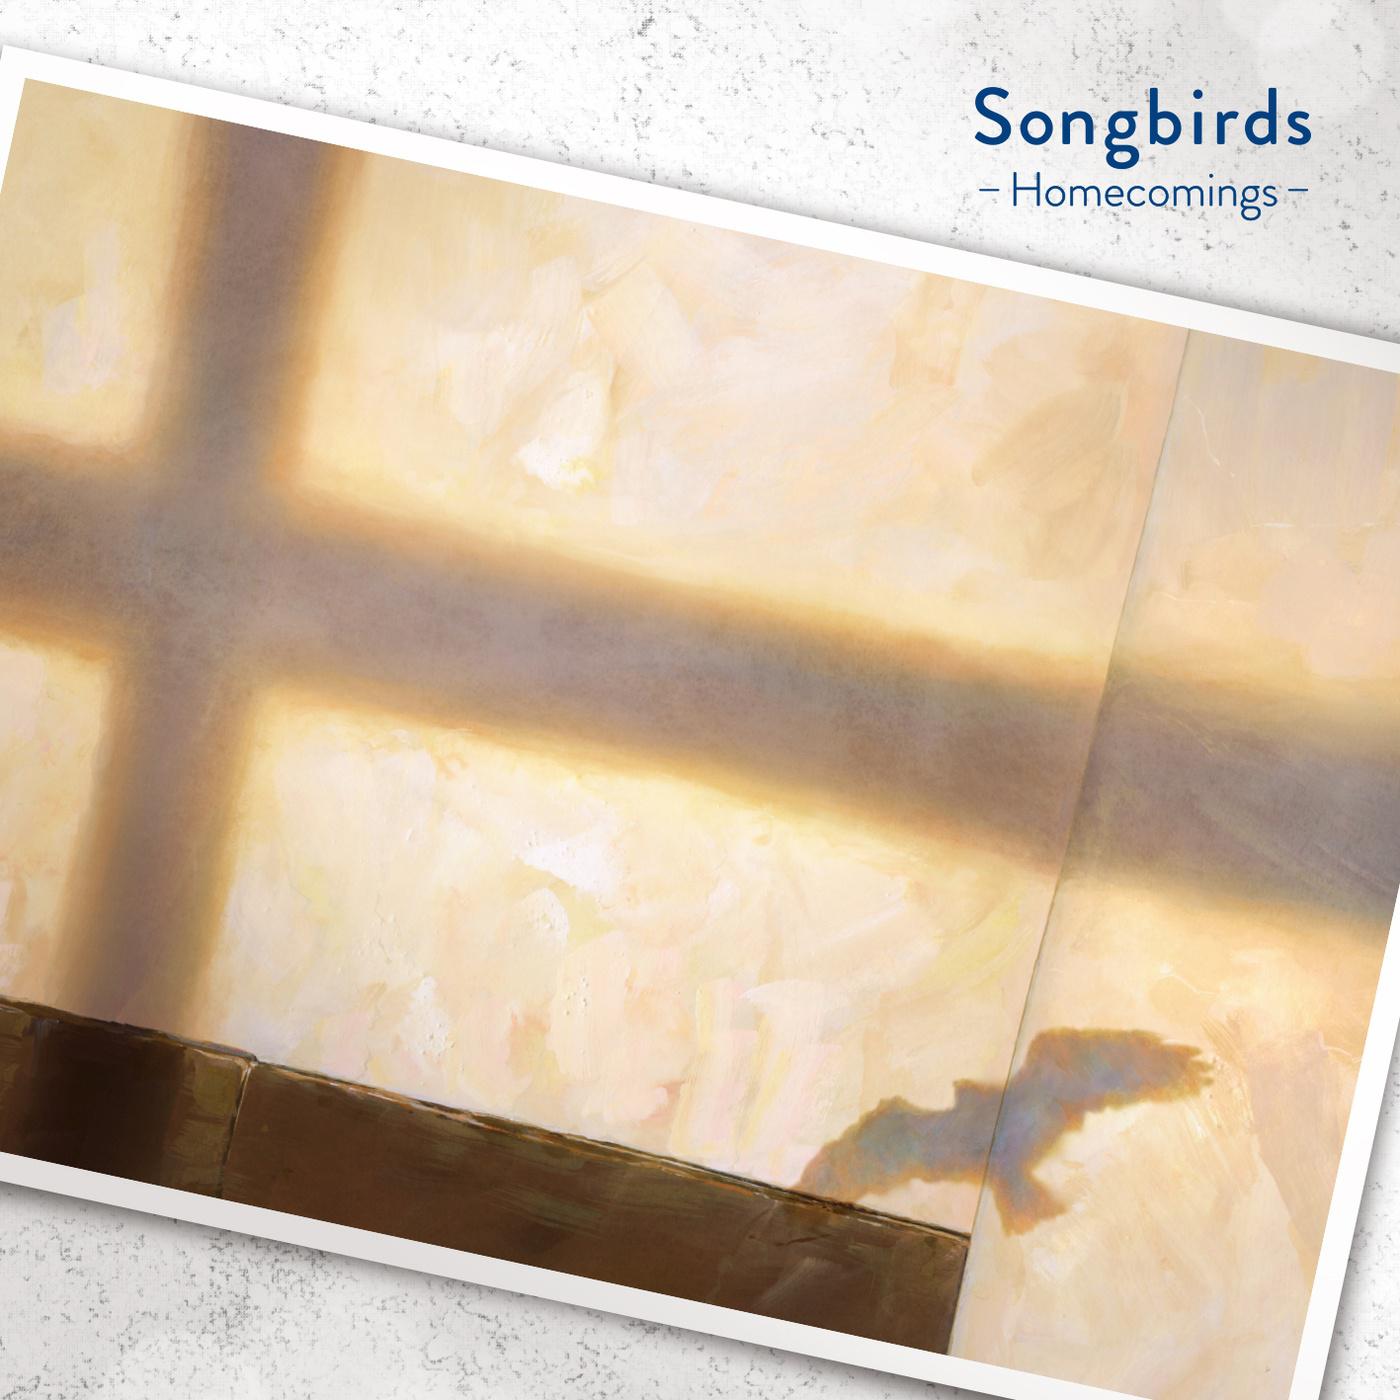 Songbirds歌词 歌手Homecomings-专辑Songbirds-单曲《Songbirds》LRC歌词下载